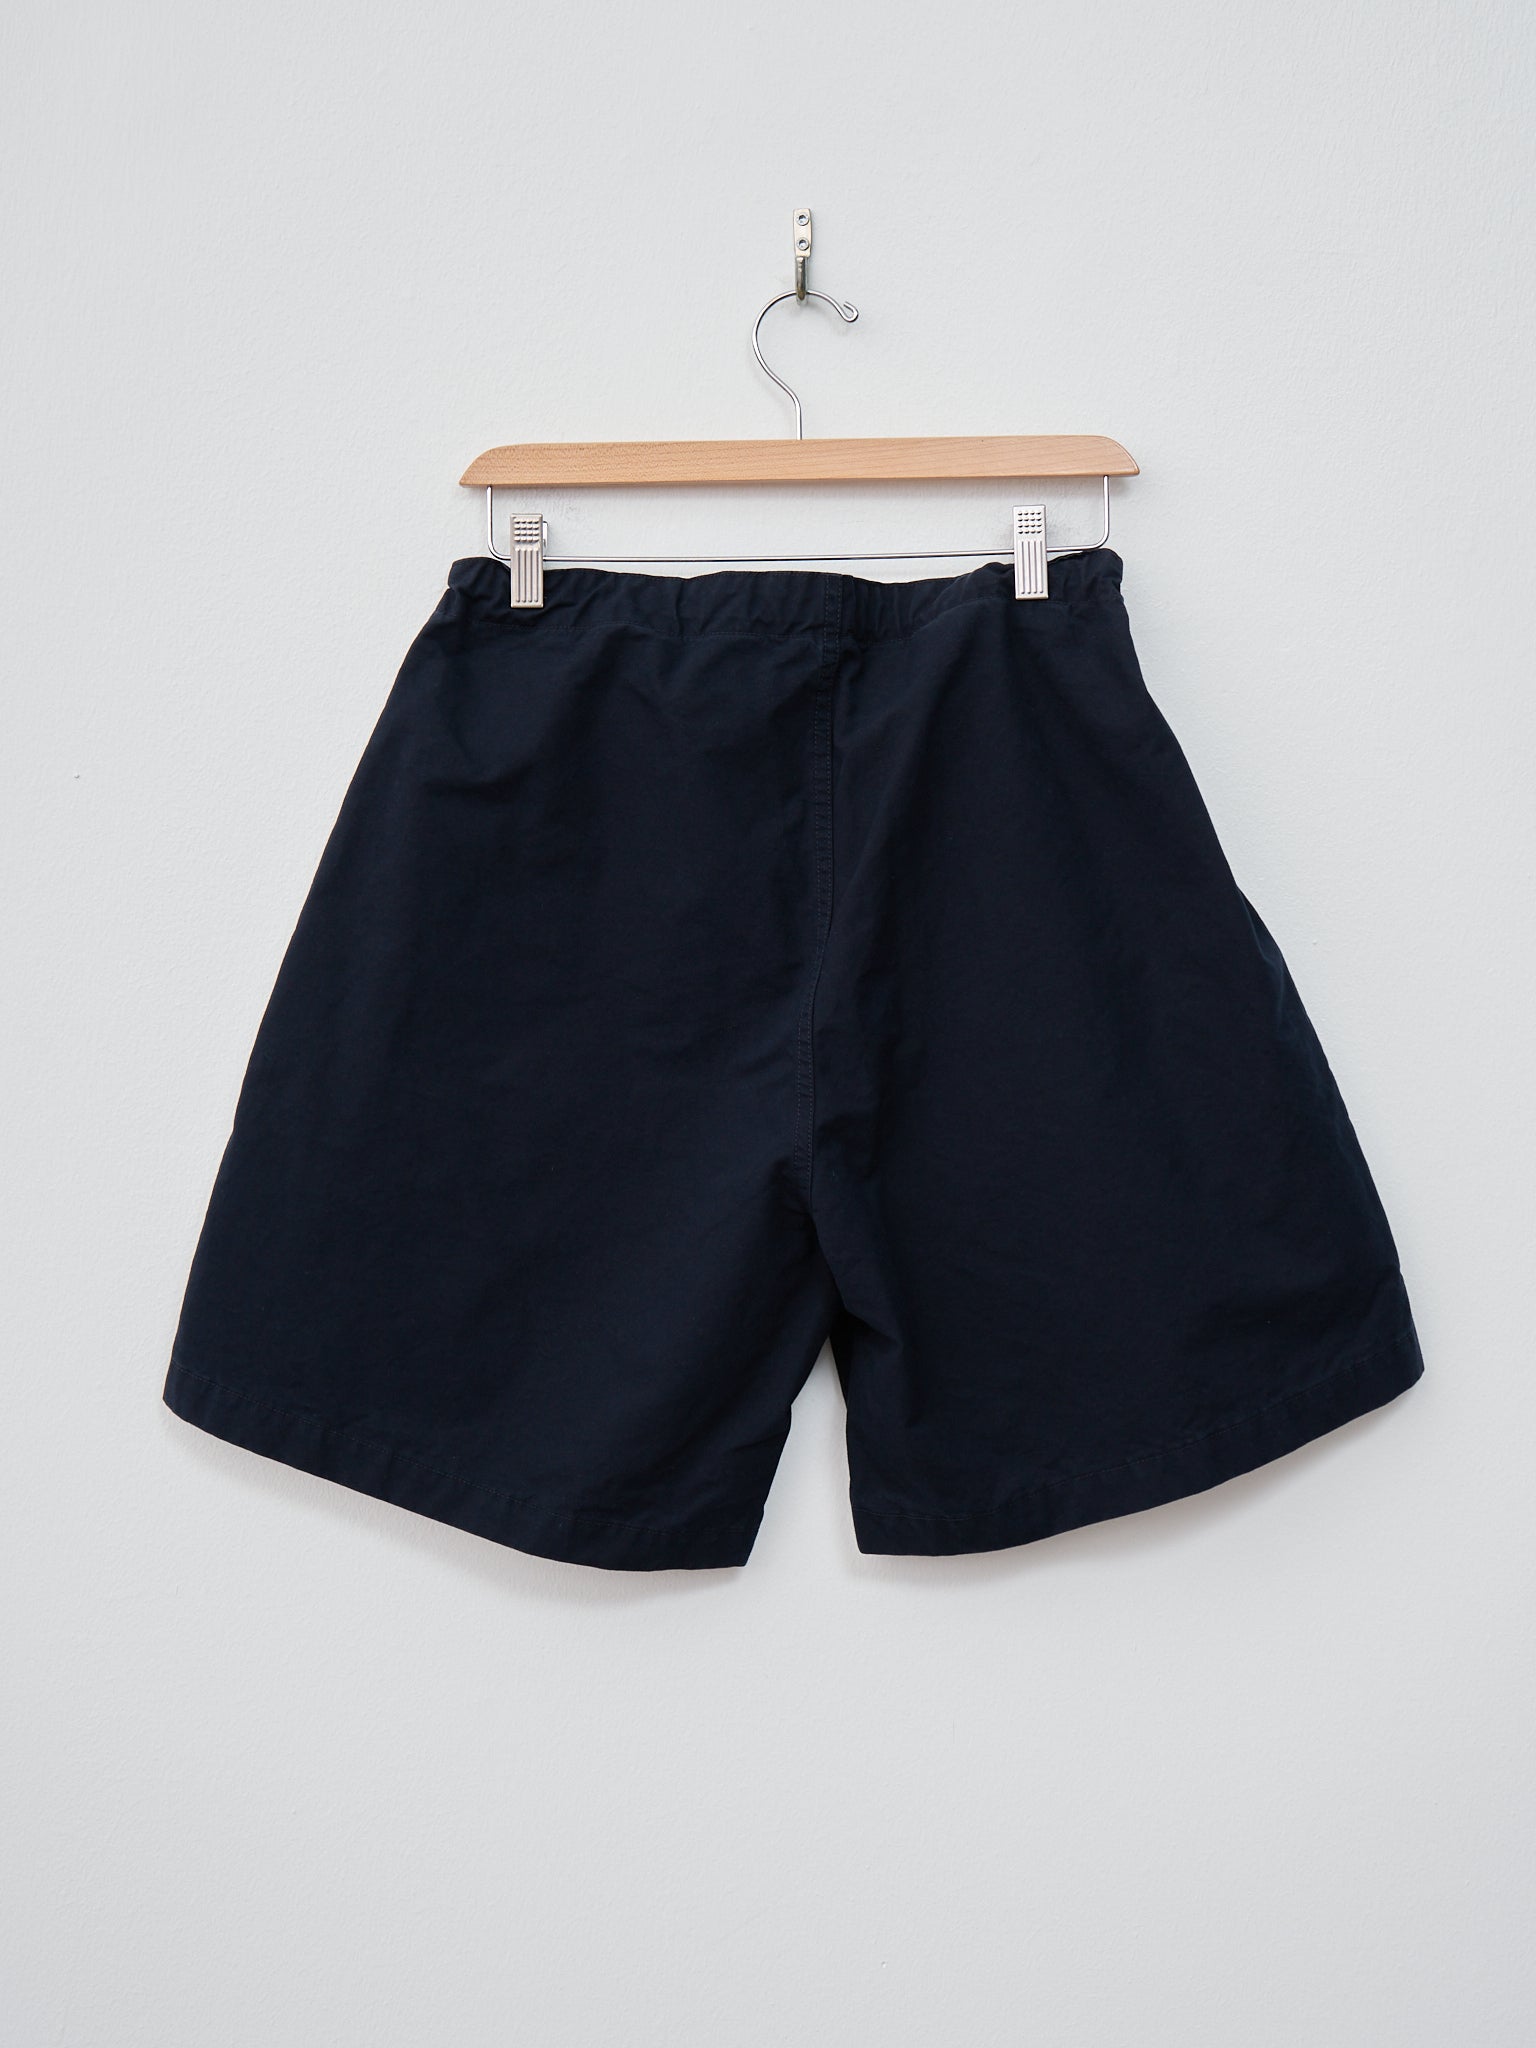 Namu Shop - Hatski British Army Short Trousers - Navy